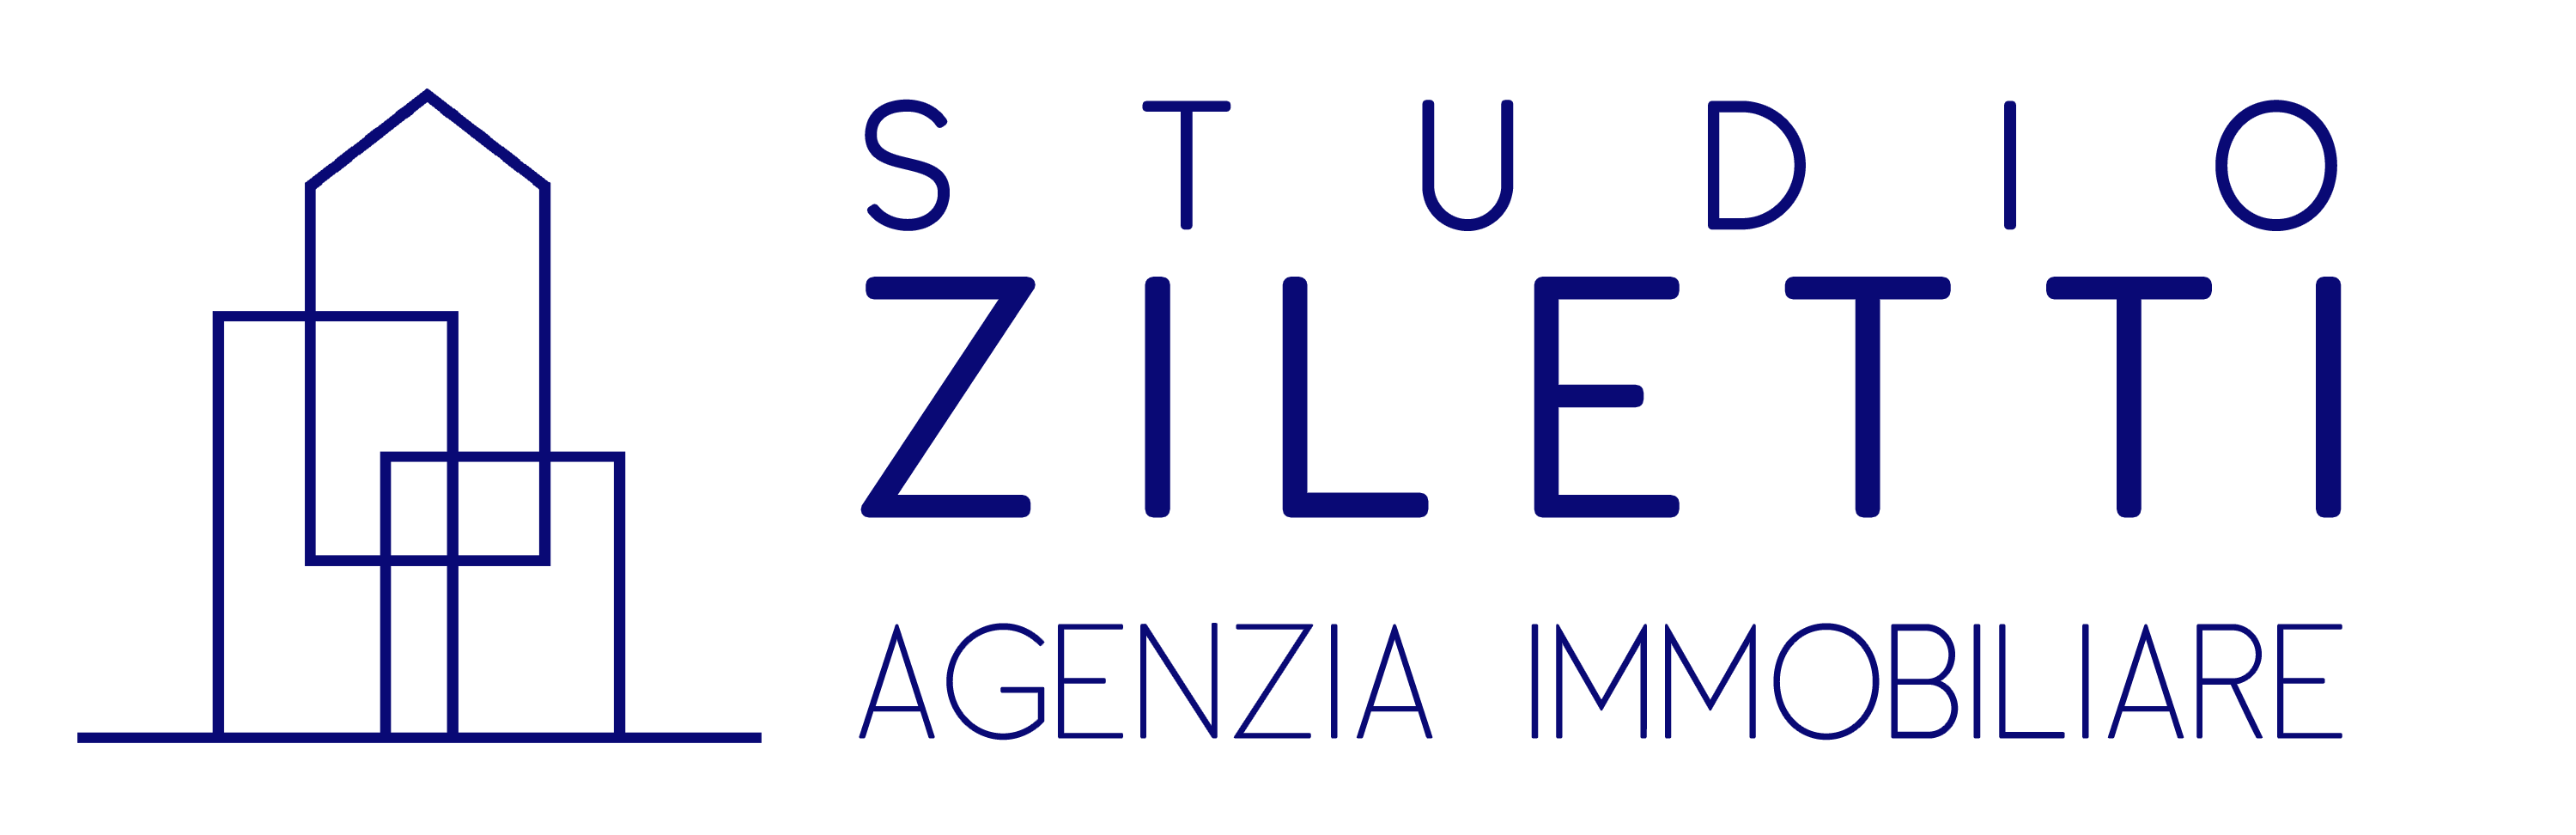 Studio Ziletti Srl